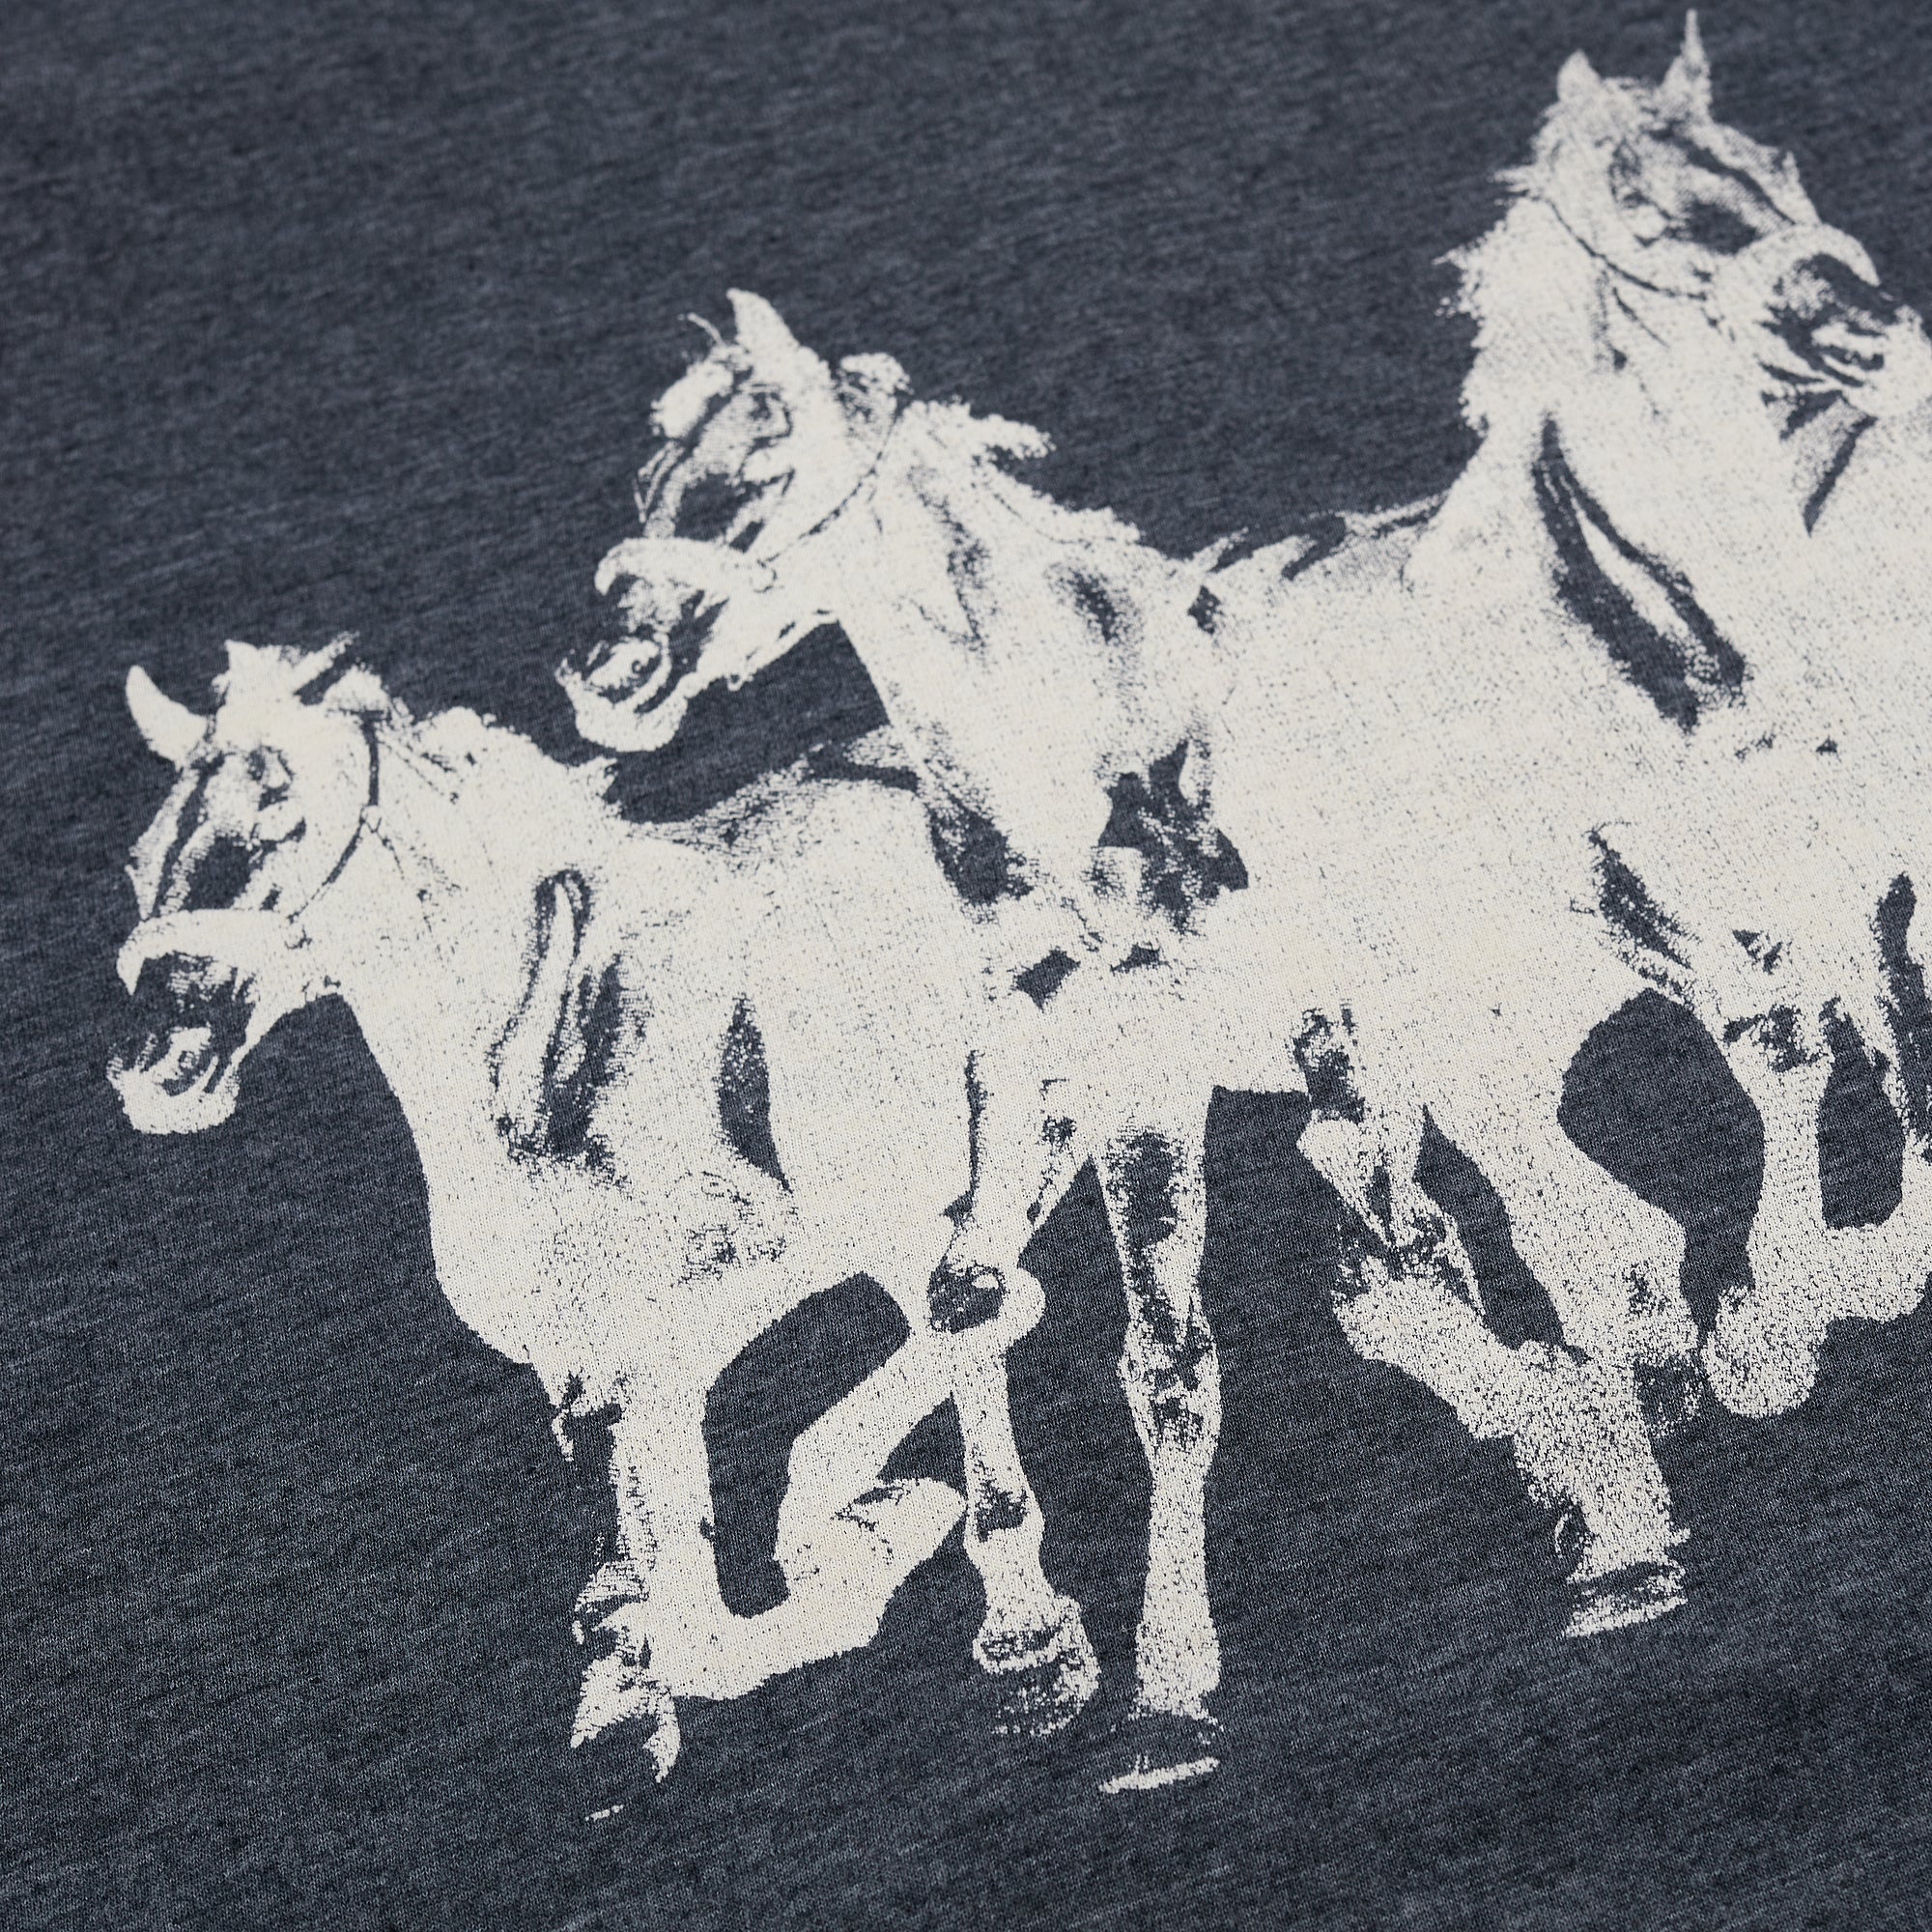 Mumford & Sons  - Dark Grey Horses Print T-shirt